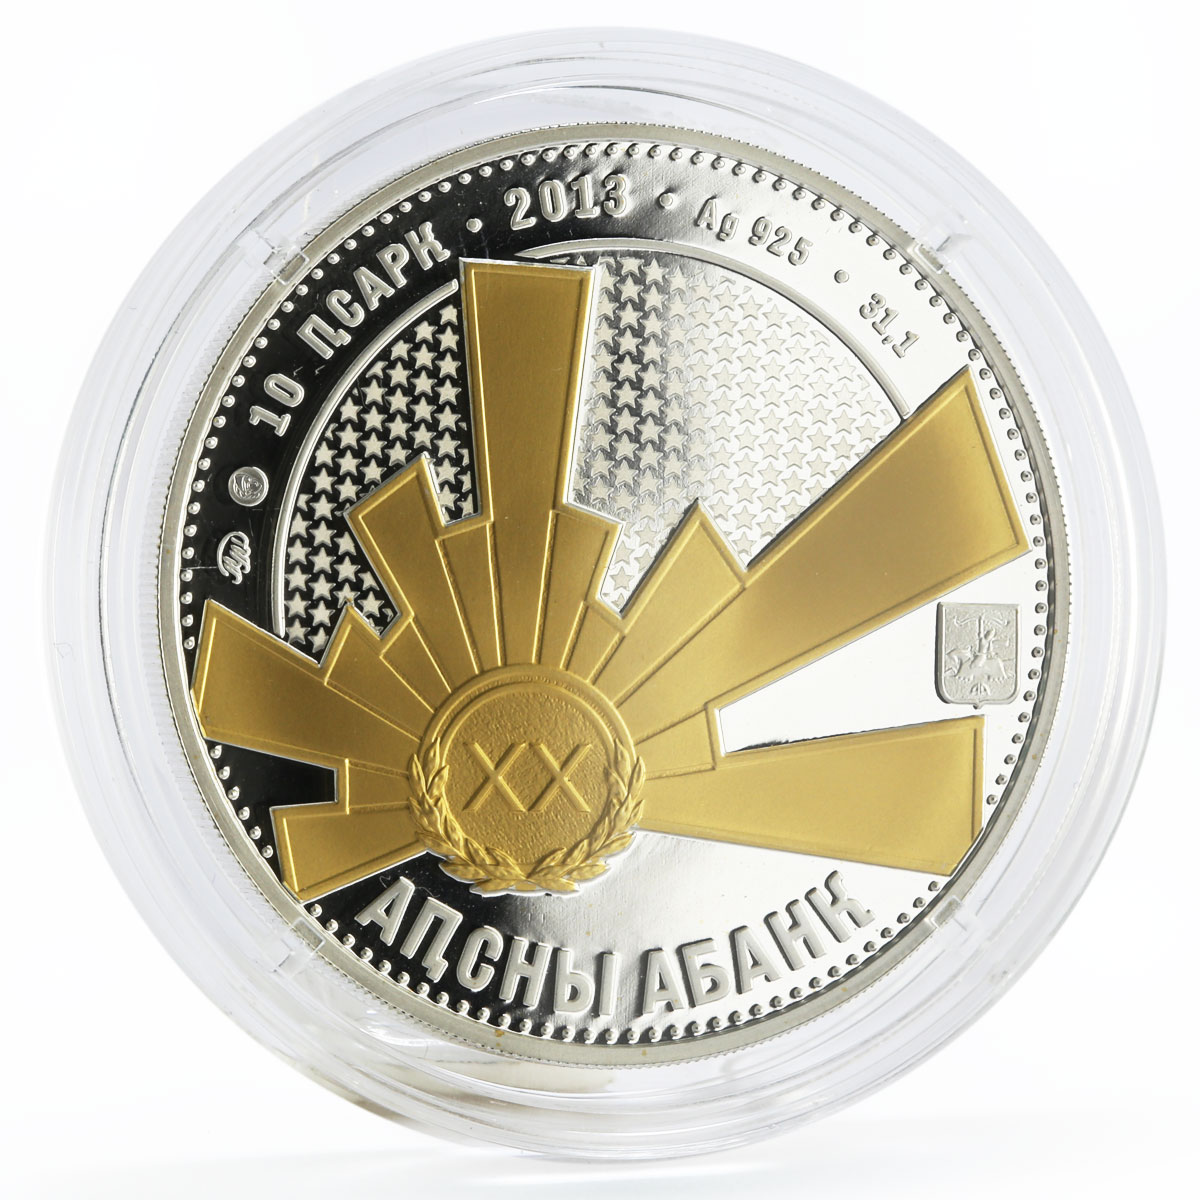 Abkhazia 10 apsars Patriotic War Heroes series S.A Sosnaliyev silver coin 2013